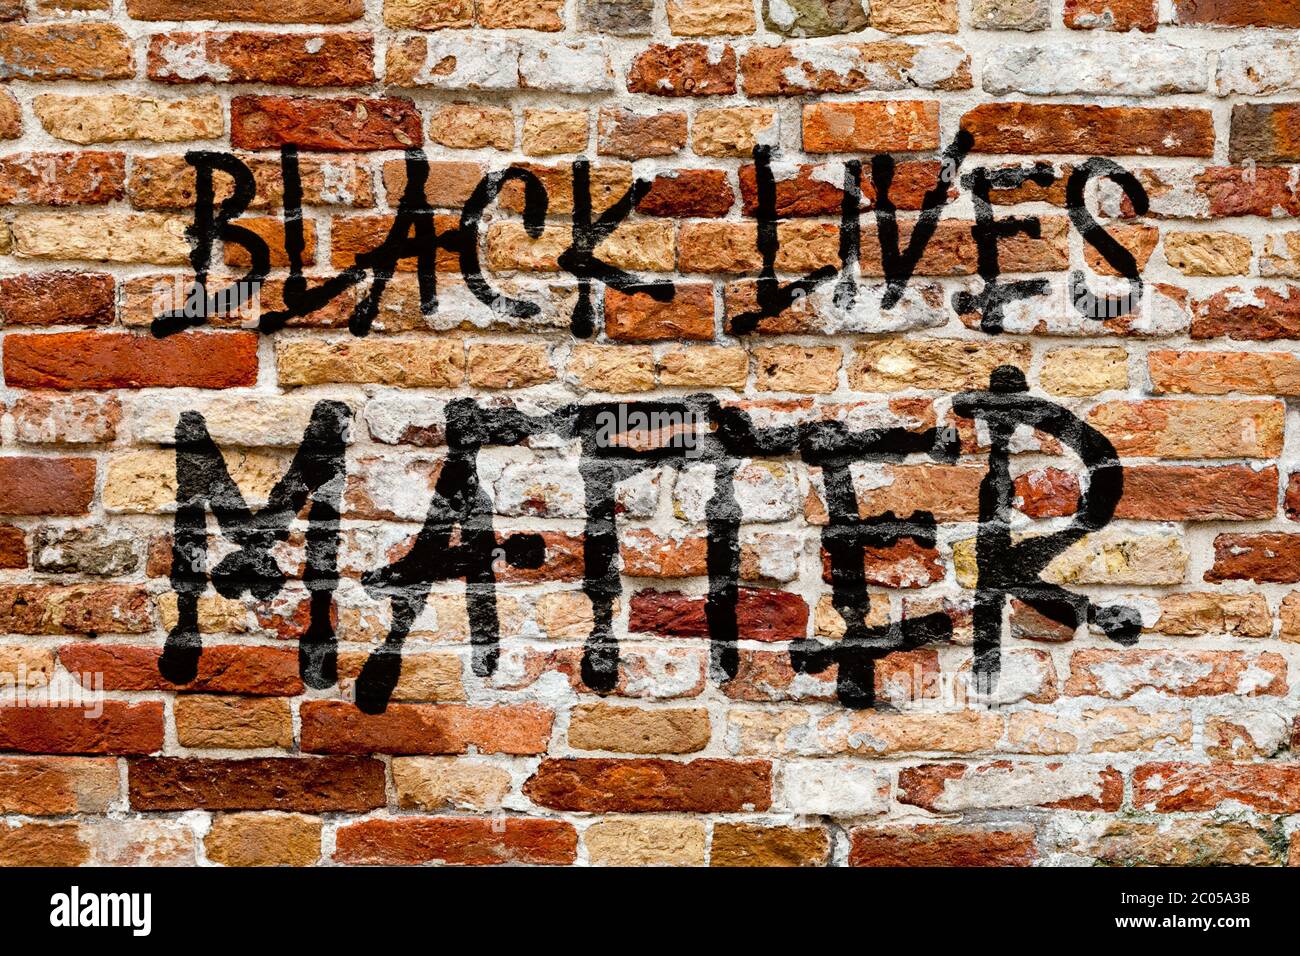 Primer plano sobre la frase "Black Lives Matter" pintada en una pared de ladrillo. Foto de stock